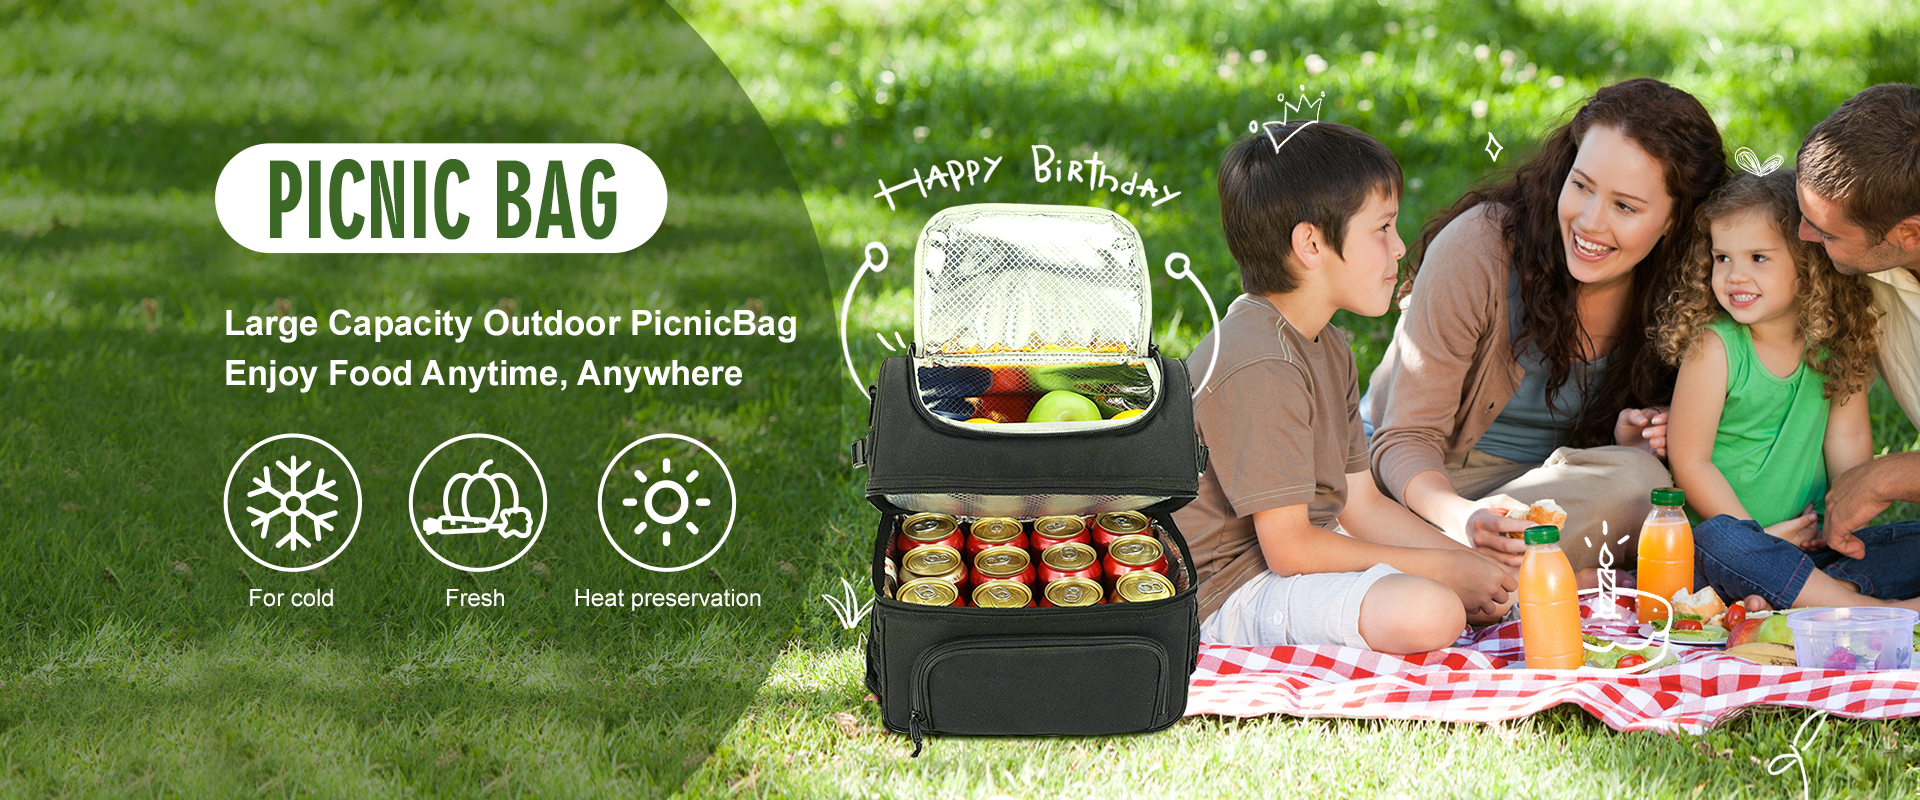 picnic basket with cooler image detail